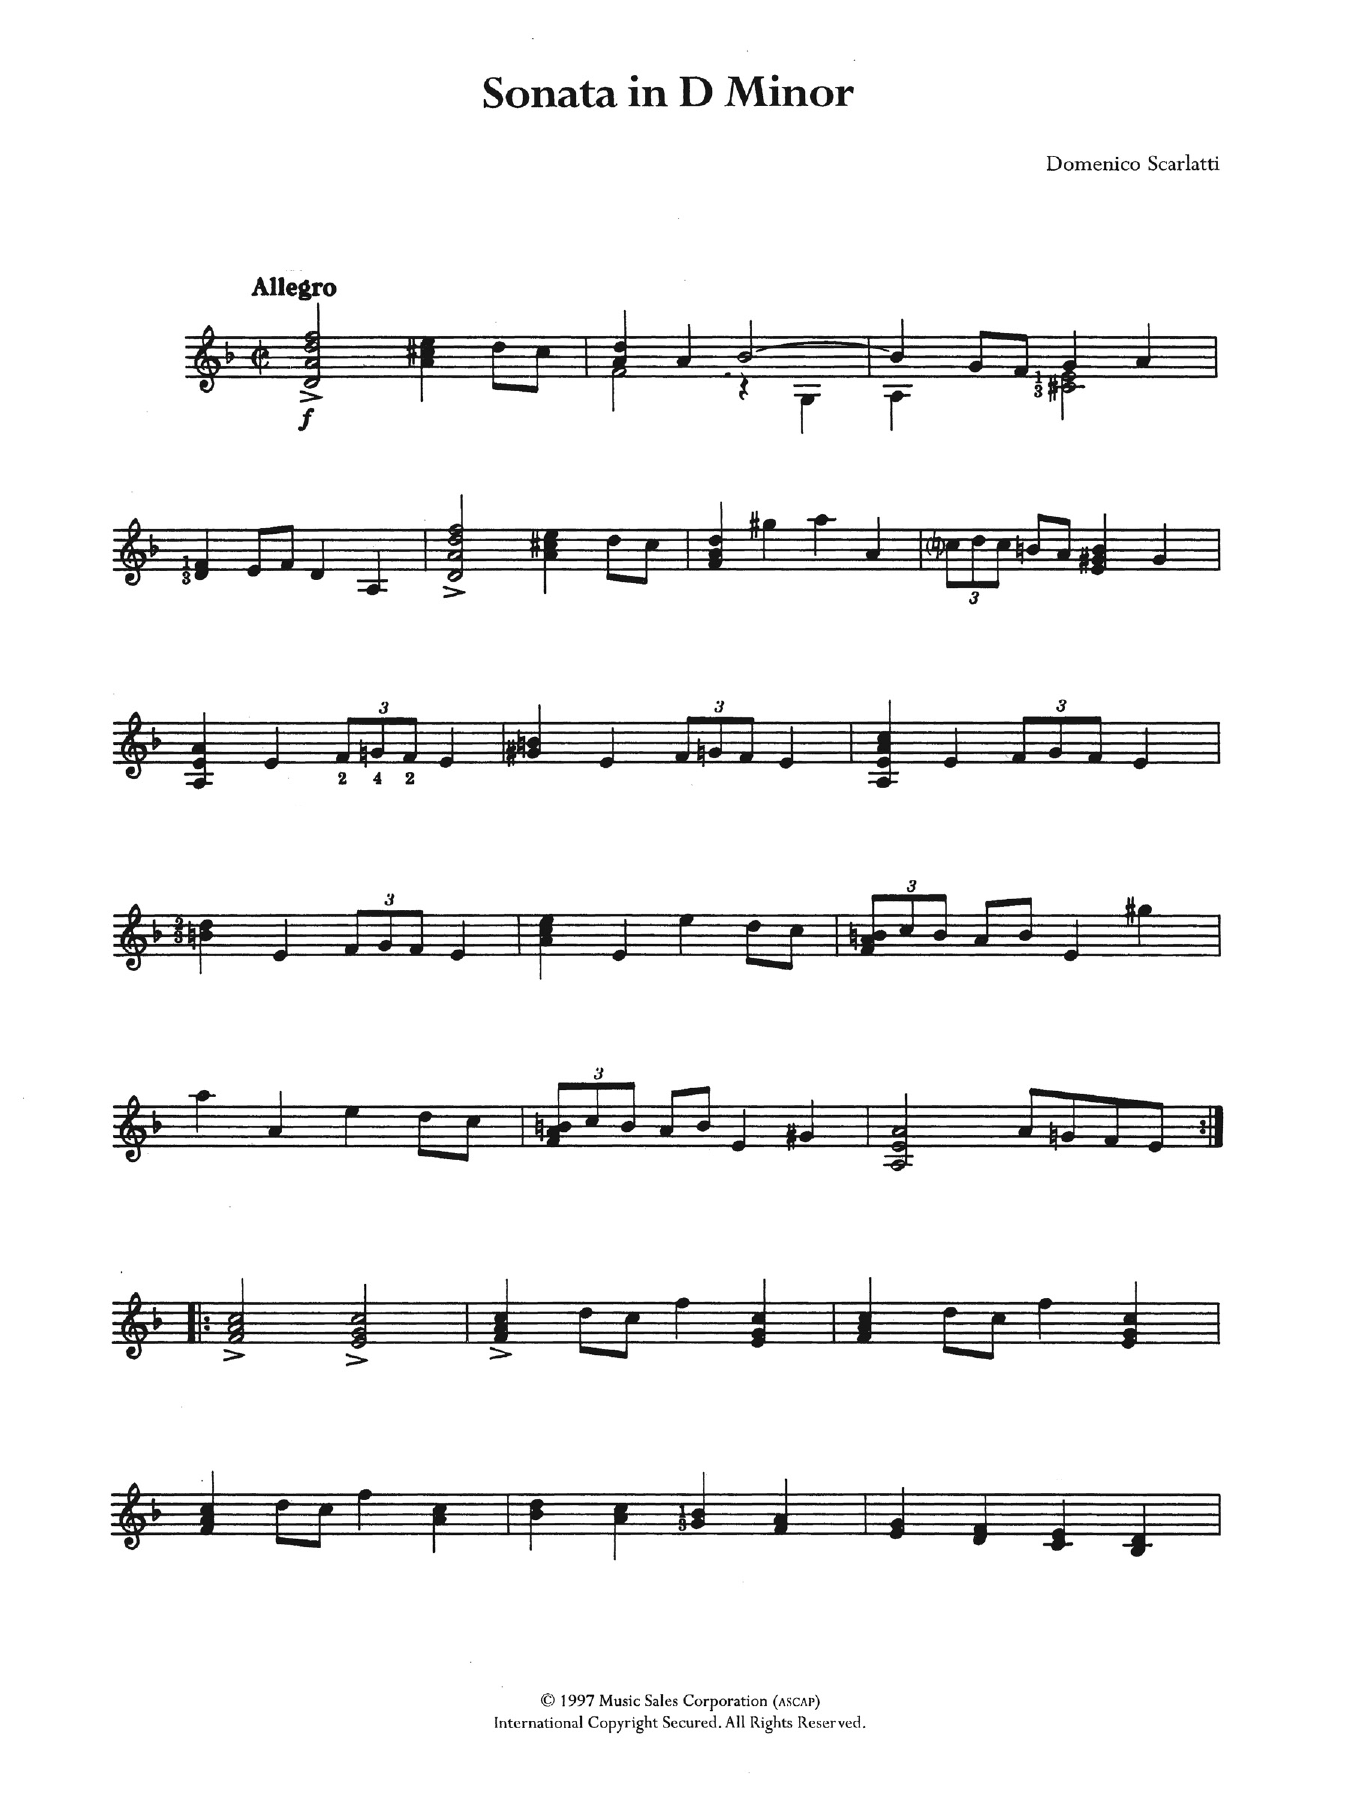 Domenico Scarlatti Sonata In D Minor Sheet Music Notes & Chords for Guitar - Download or Print PDF